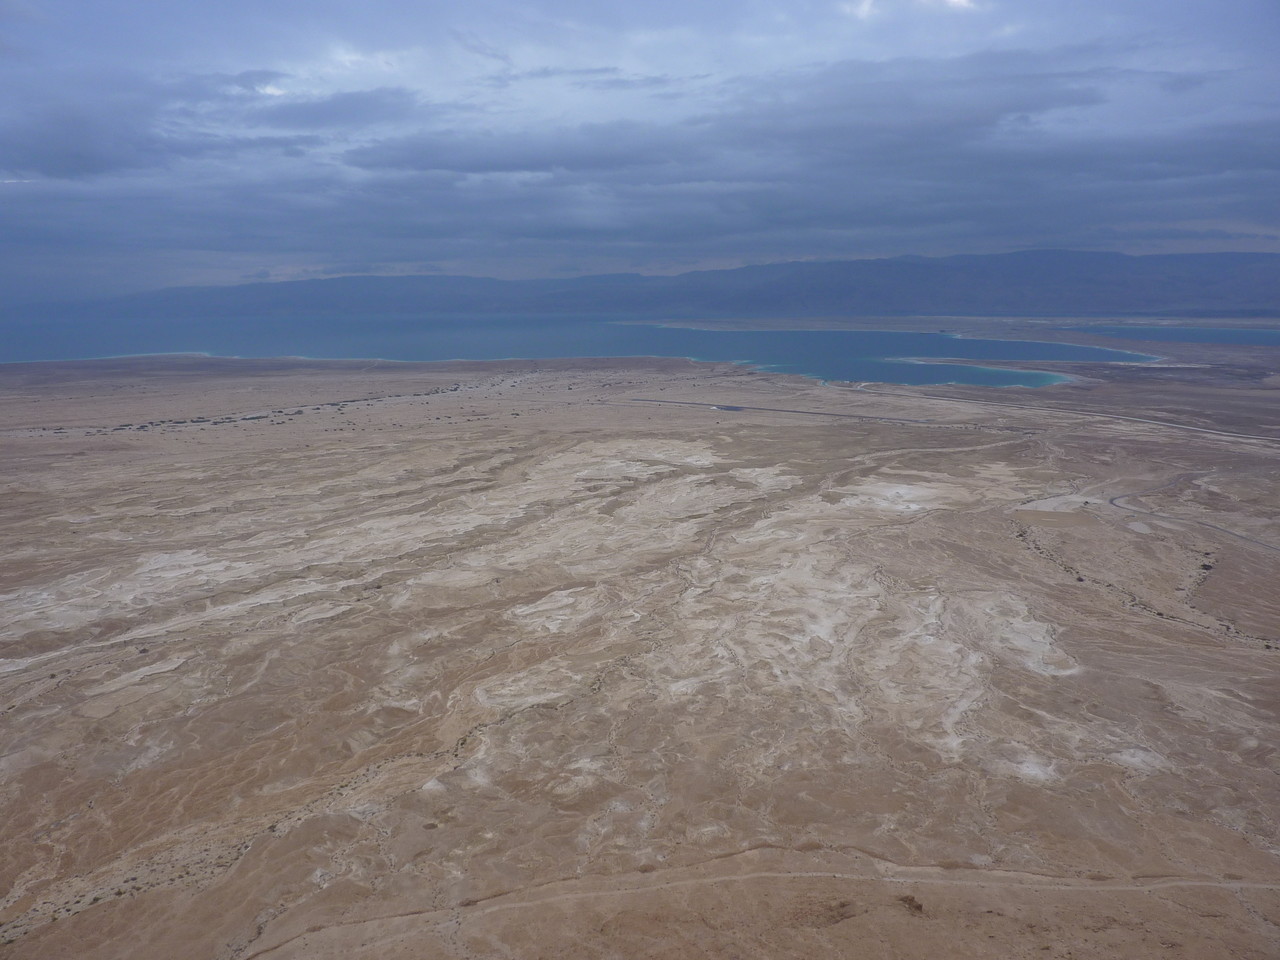 Judean Desert and Dead Sea